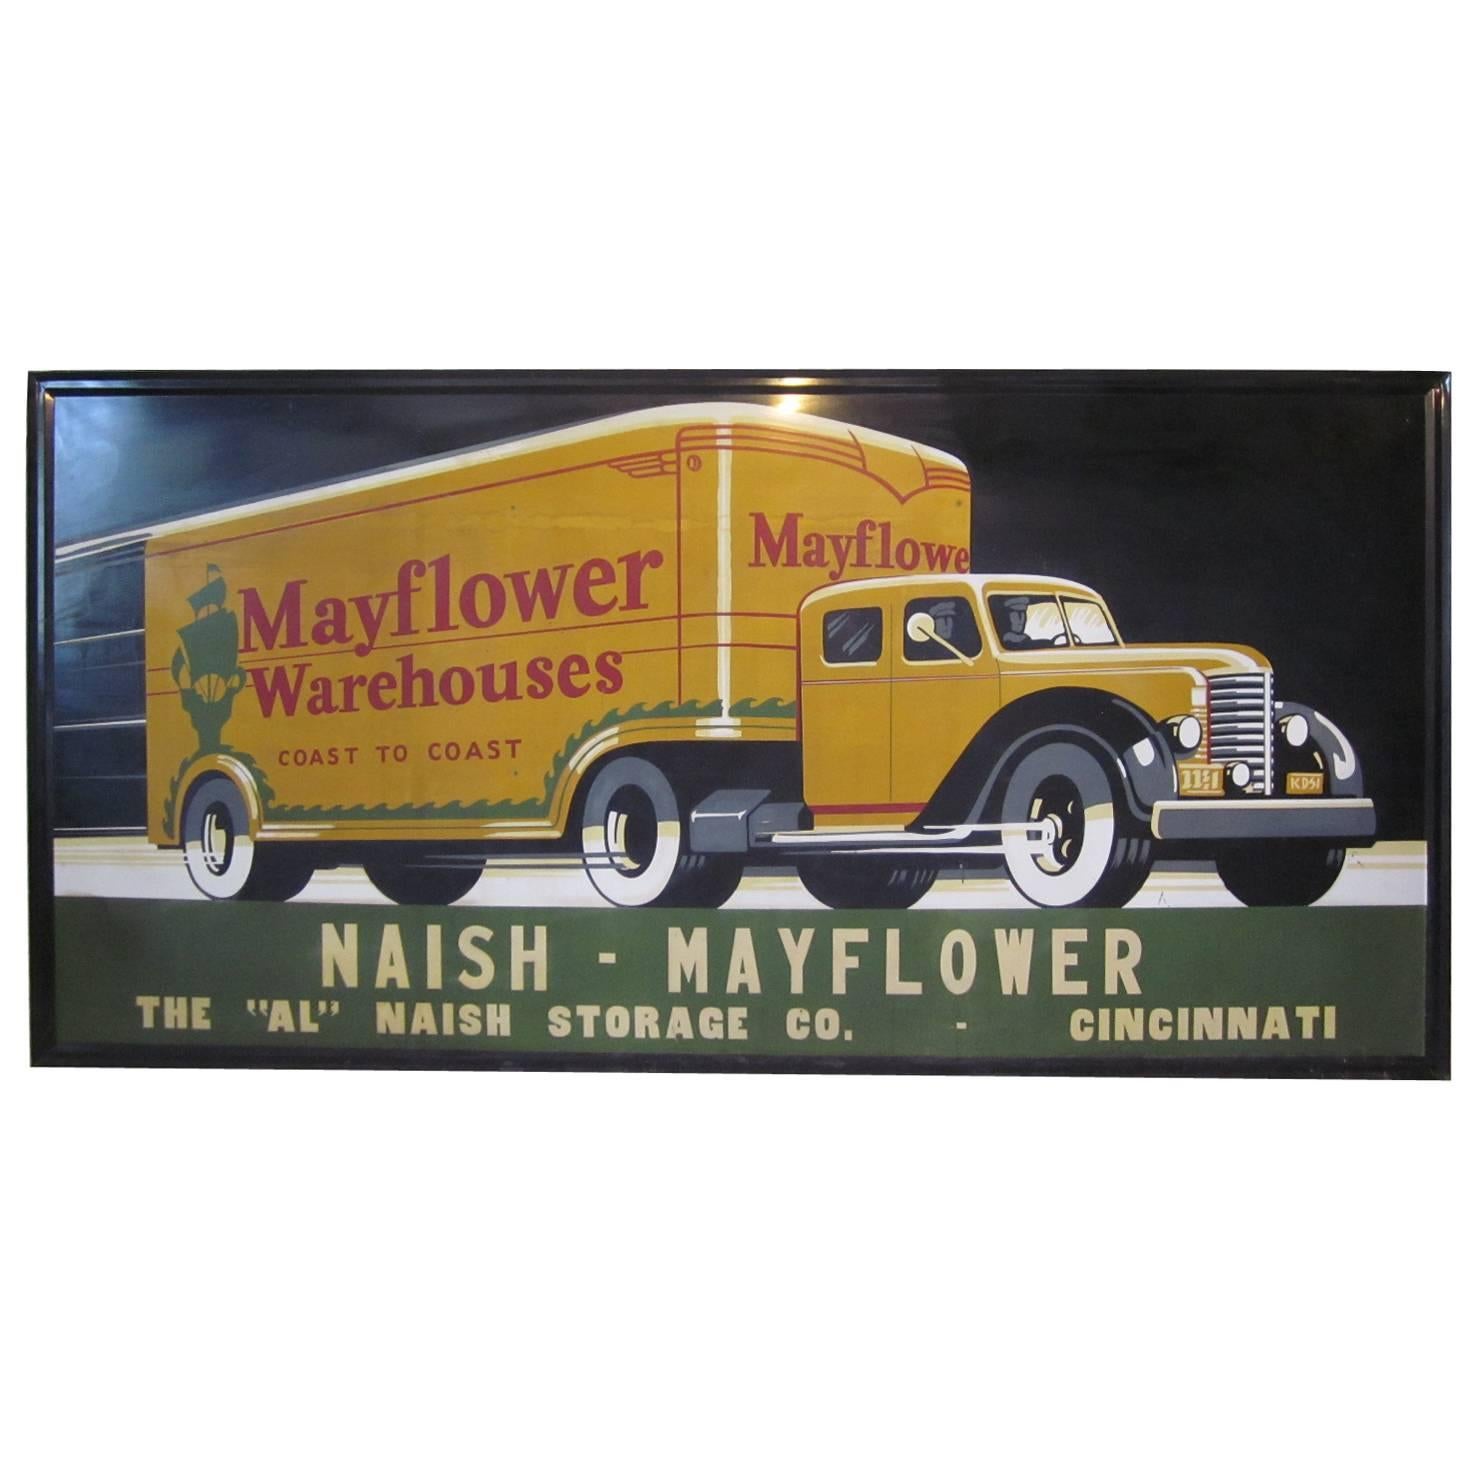 Vintage Art Deco Truck Advertising Sign